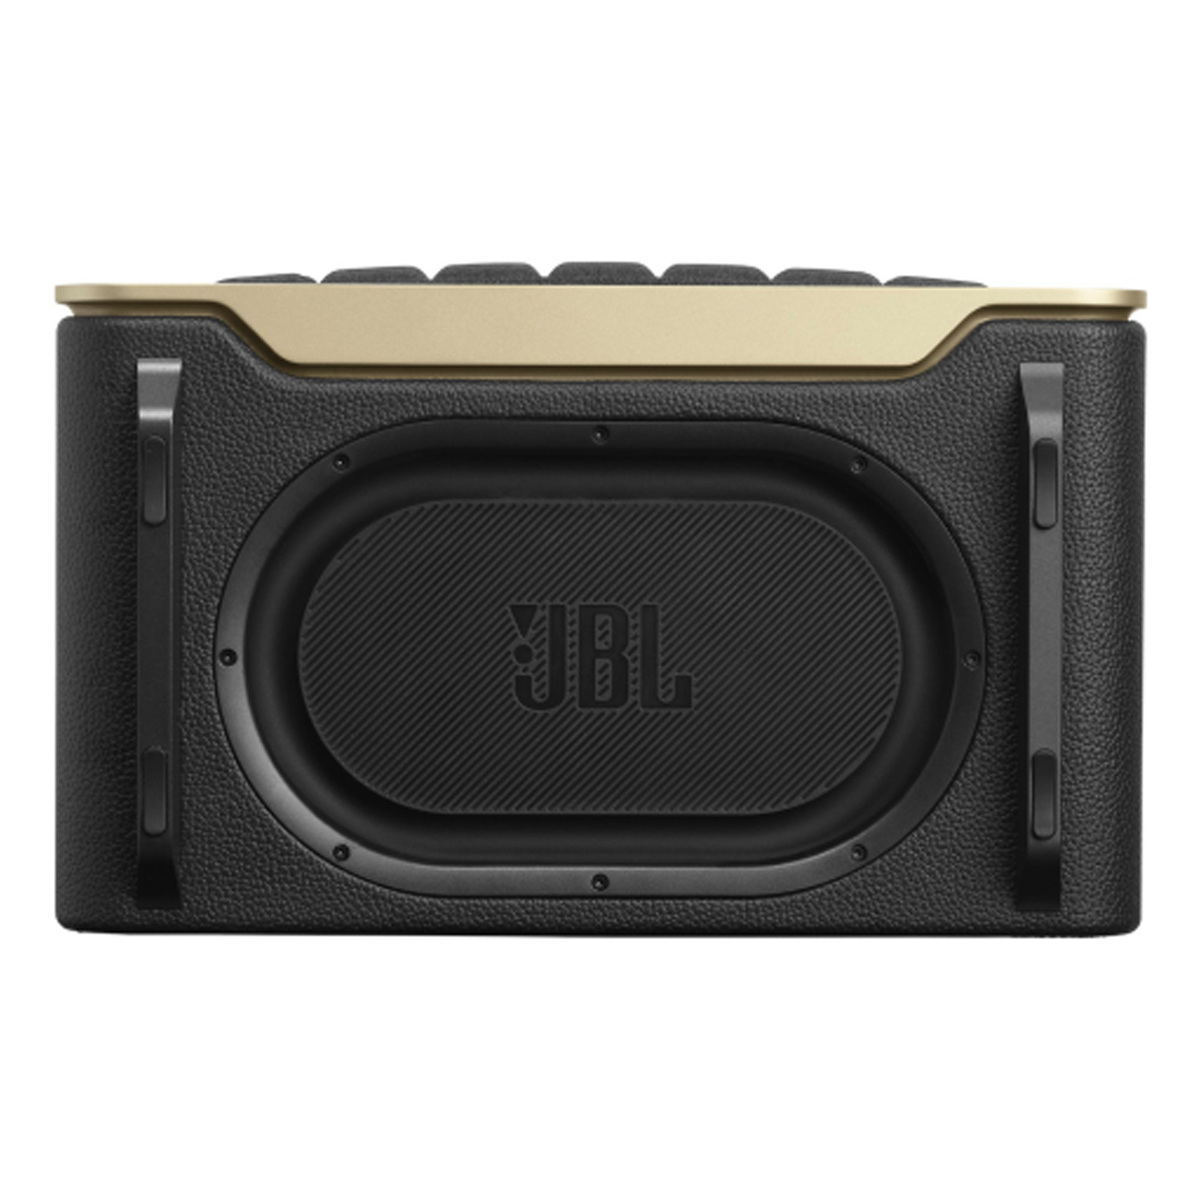 JBL Authentics 200 Smart Home Speaker with Wi-Fi & Bluetooth, Black